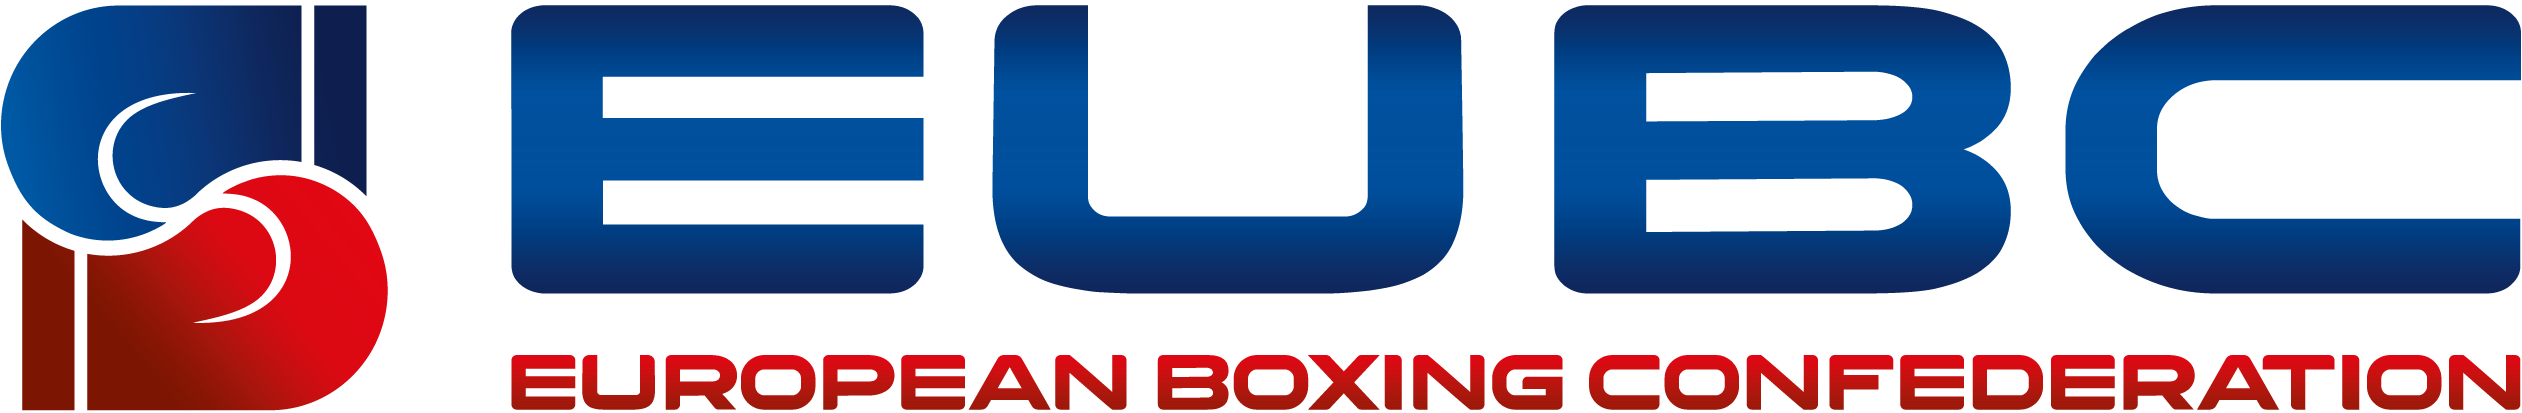 eubcboxing logo, european boxing confederation